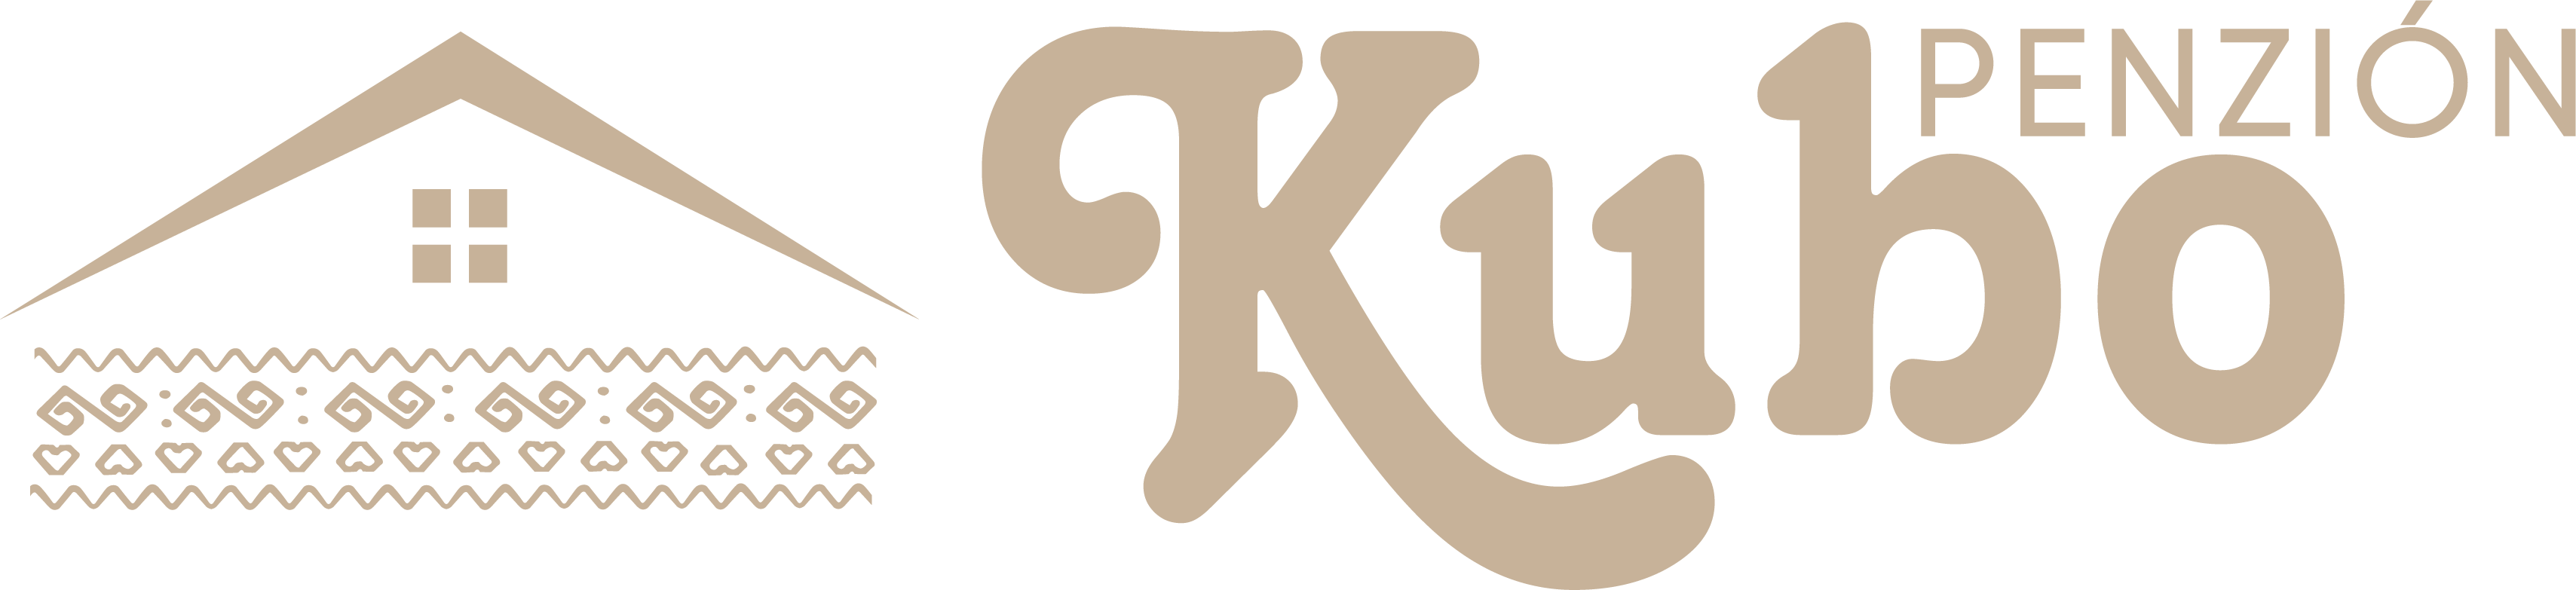 Penzión Kubo logo sticky menu